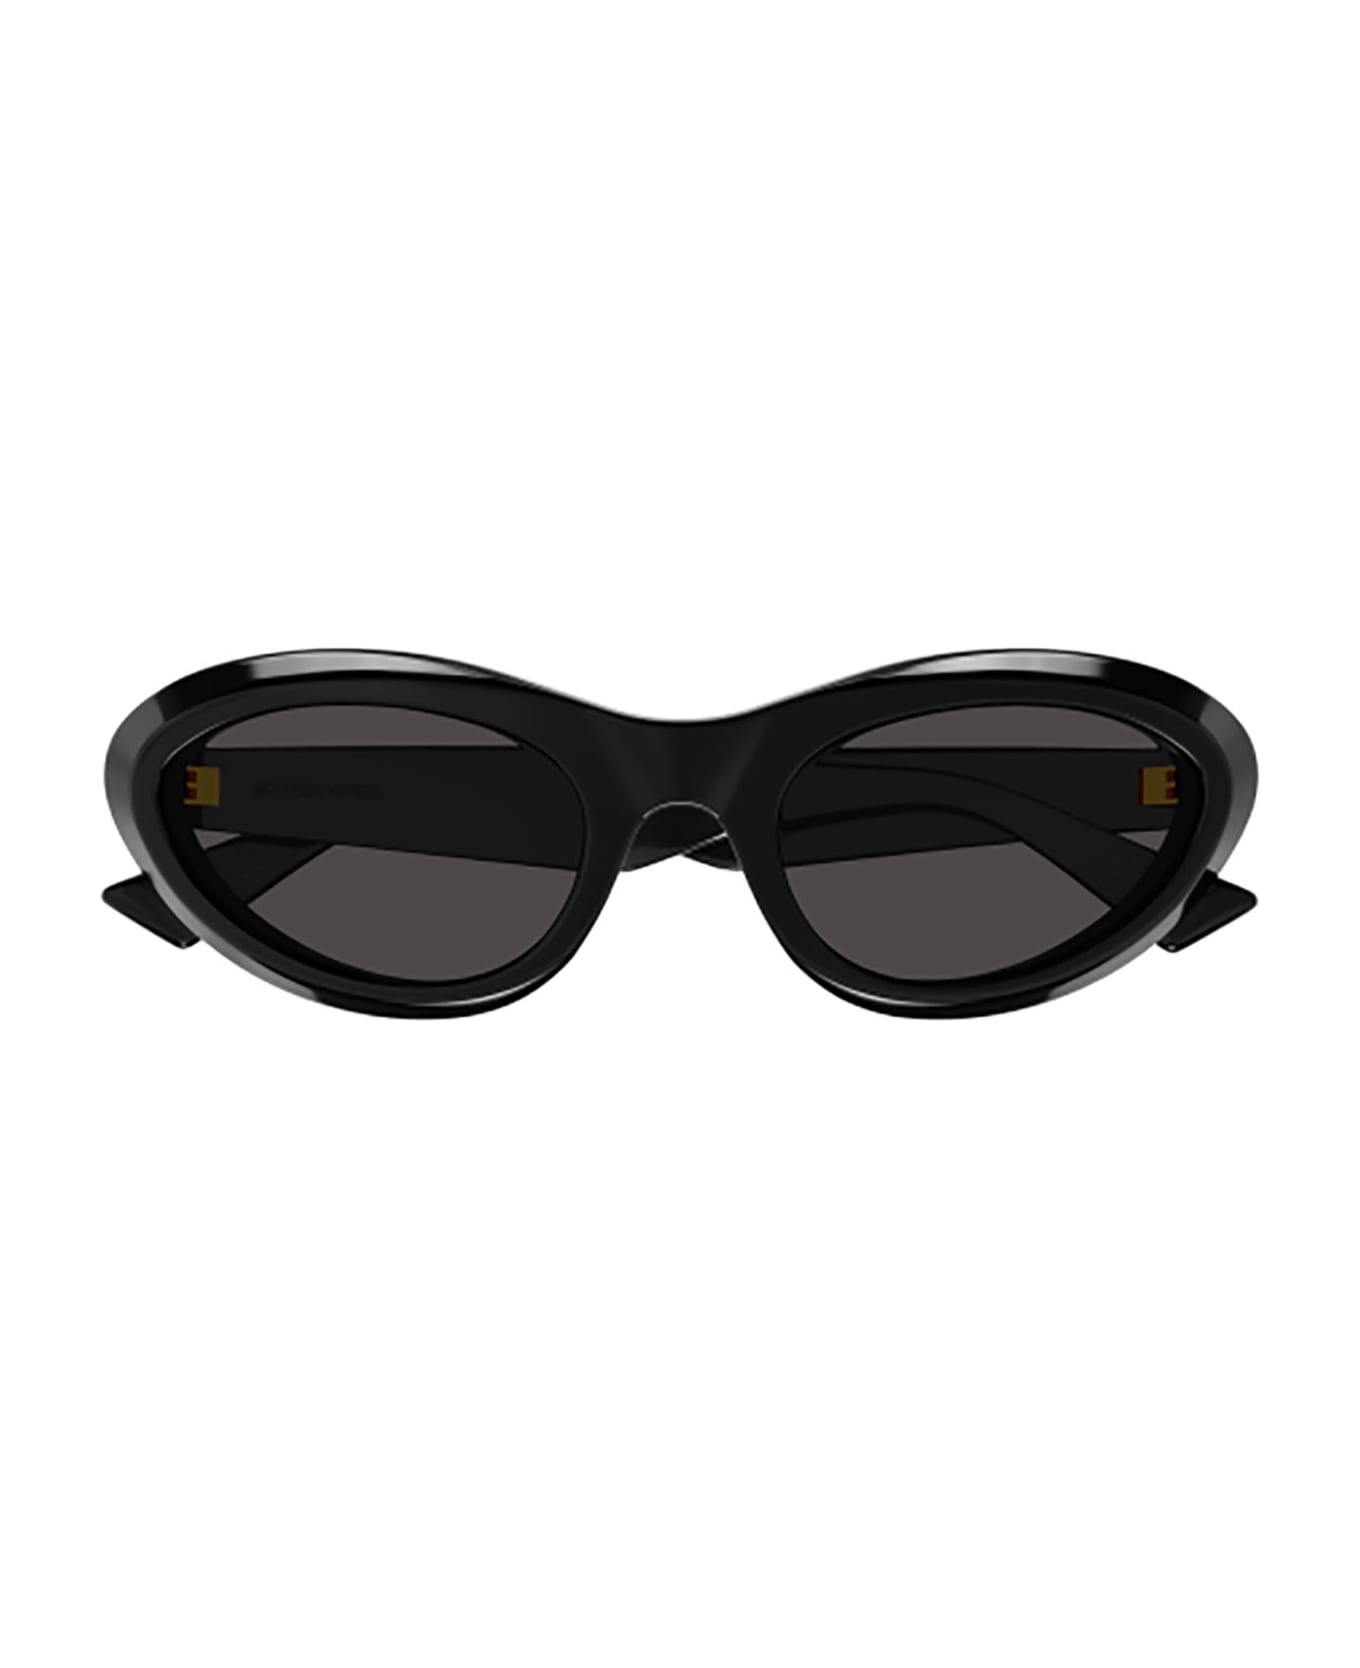 Bottega Veneta Eyewear 1egg4jb0a - Sunglasses OO9384 938406